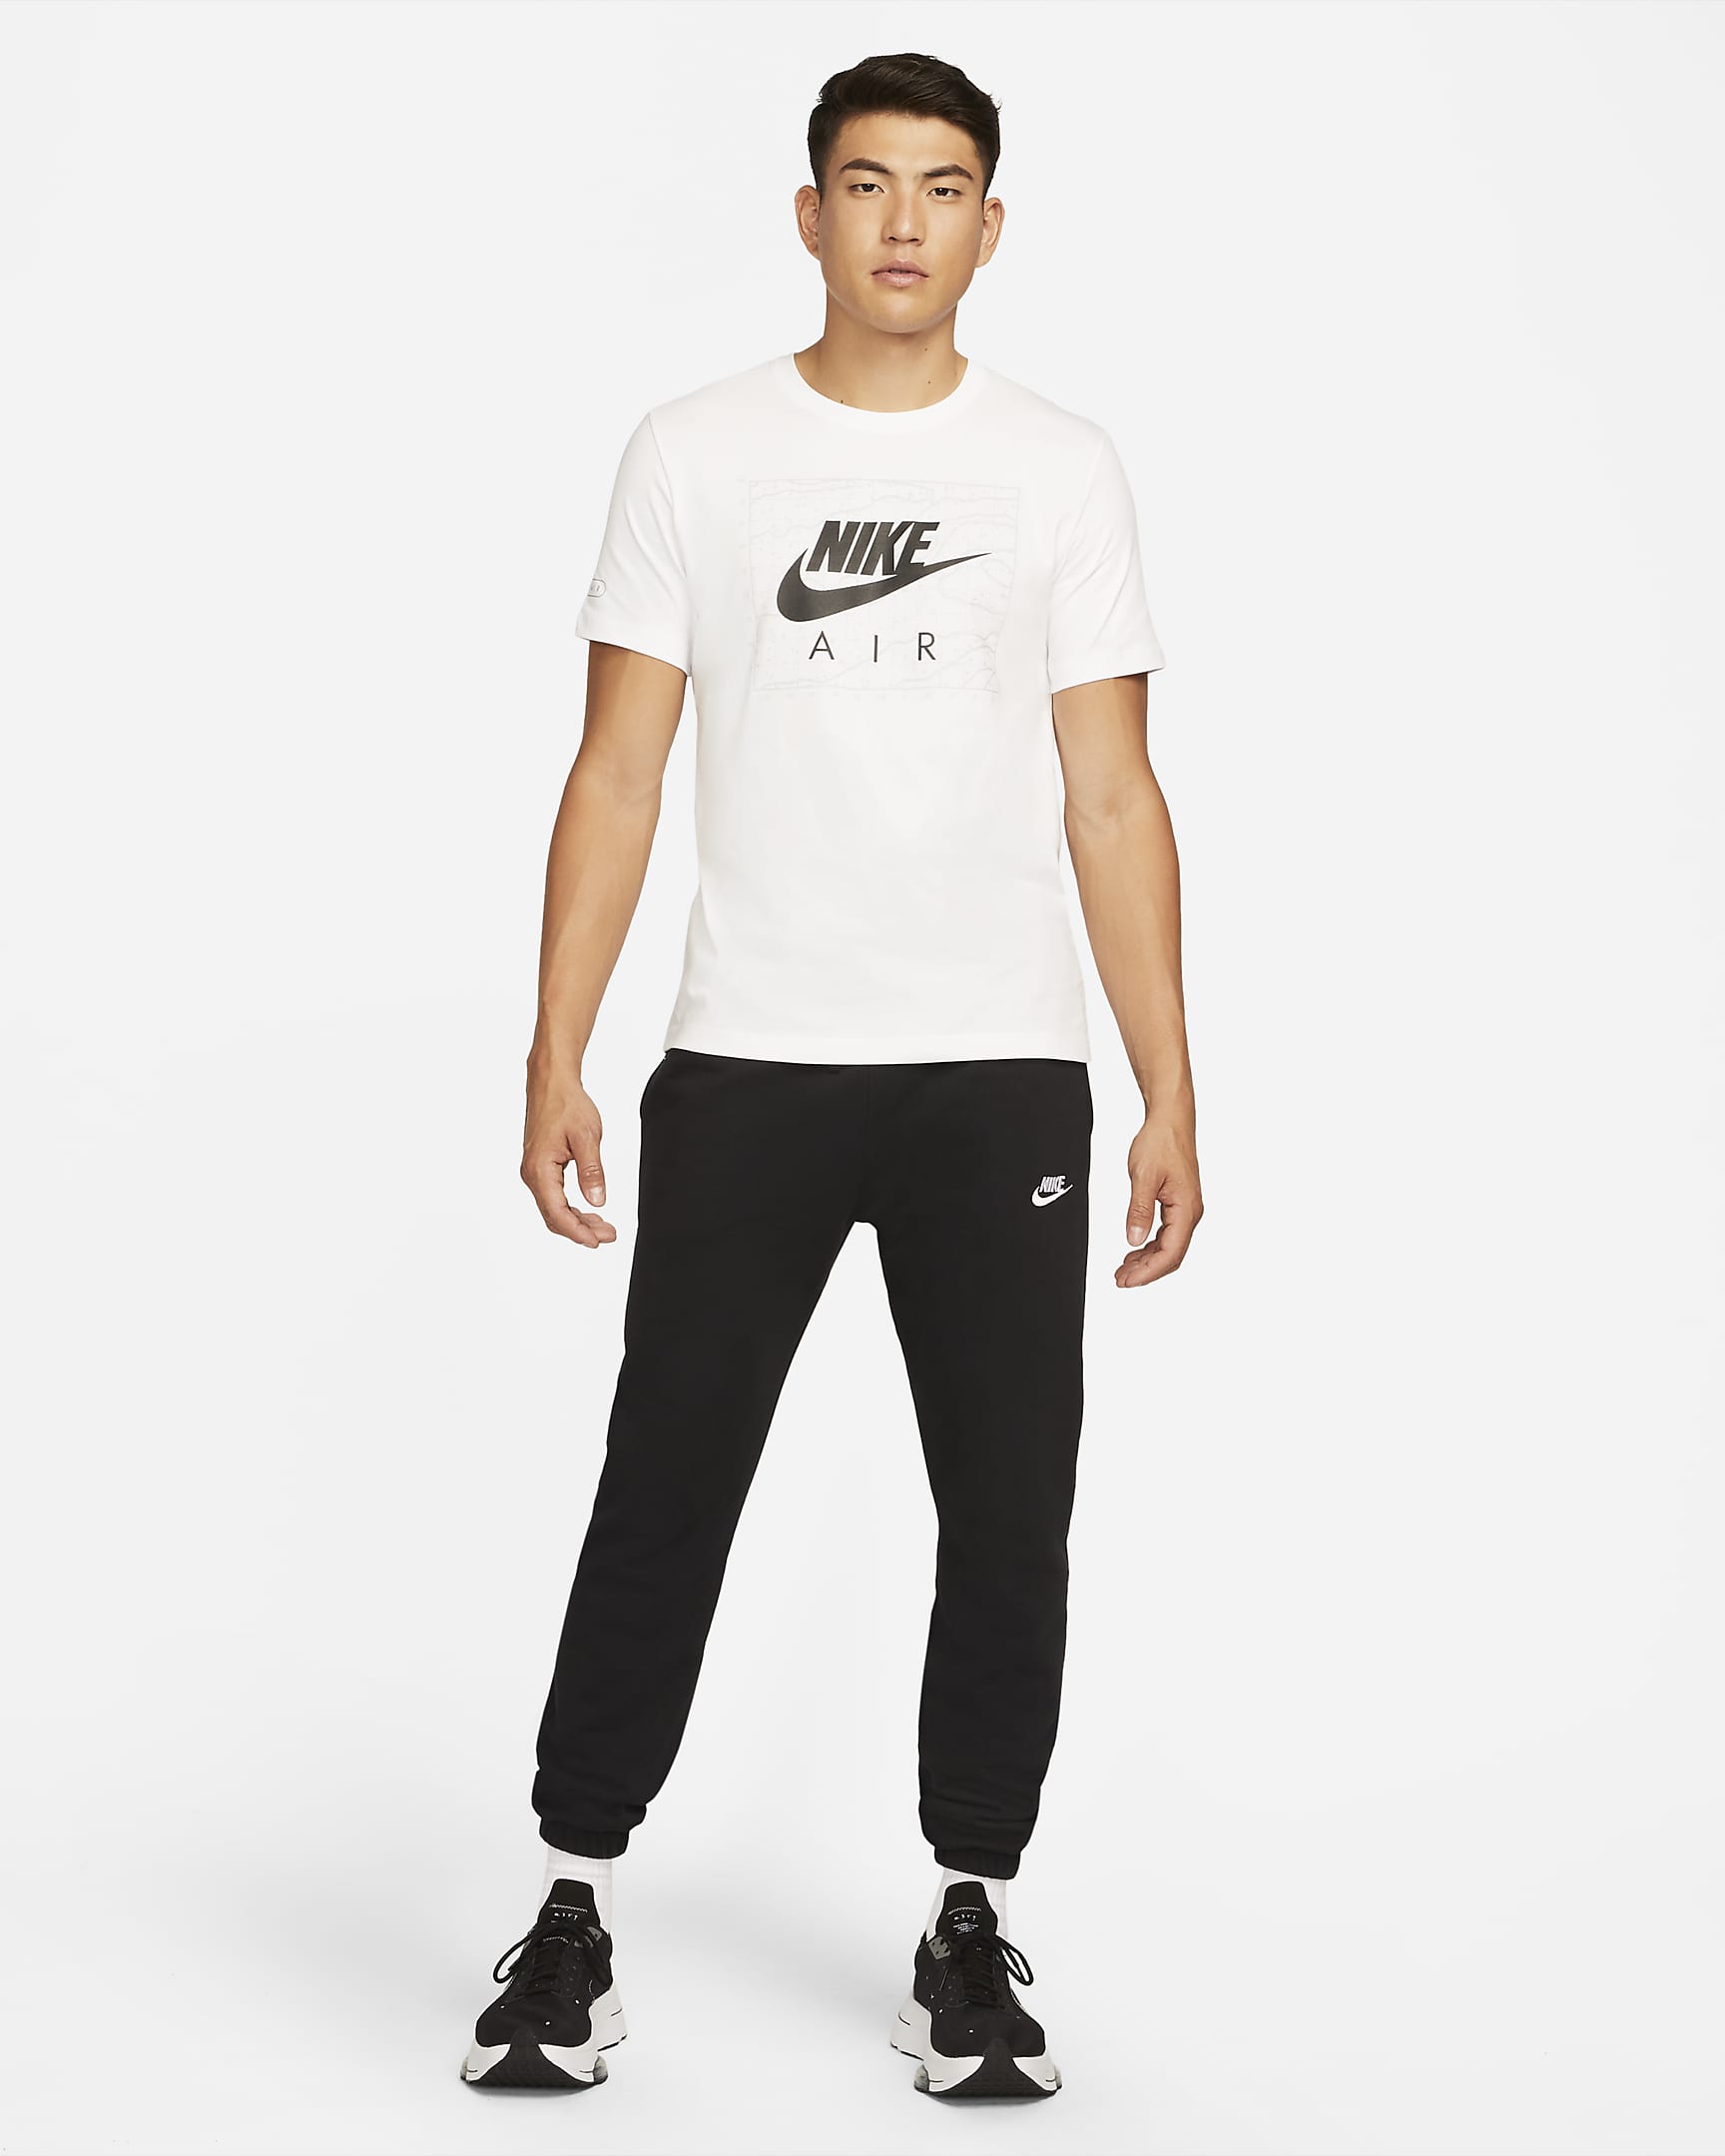 Nike Air Men's T-Shirt. Nike MY